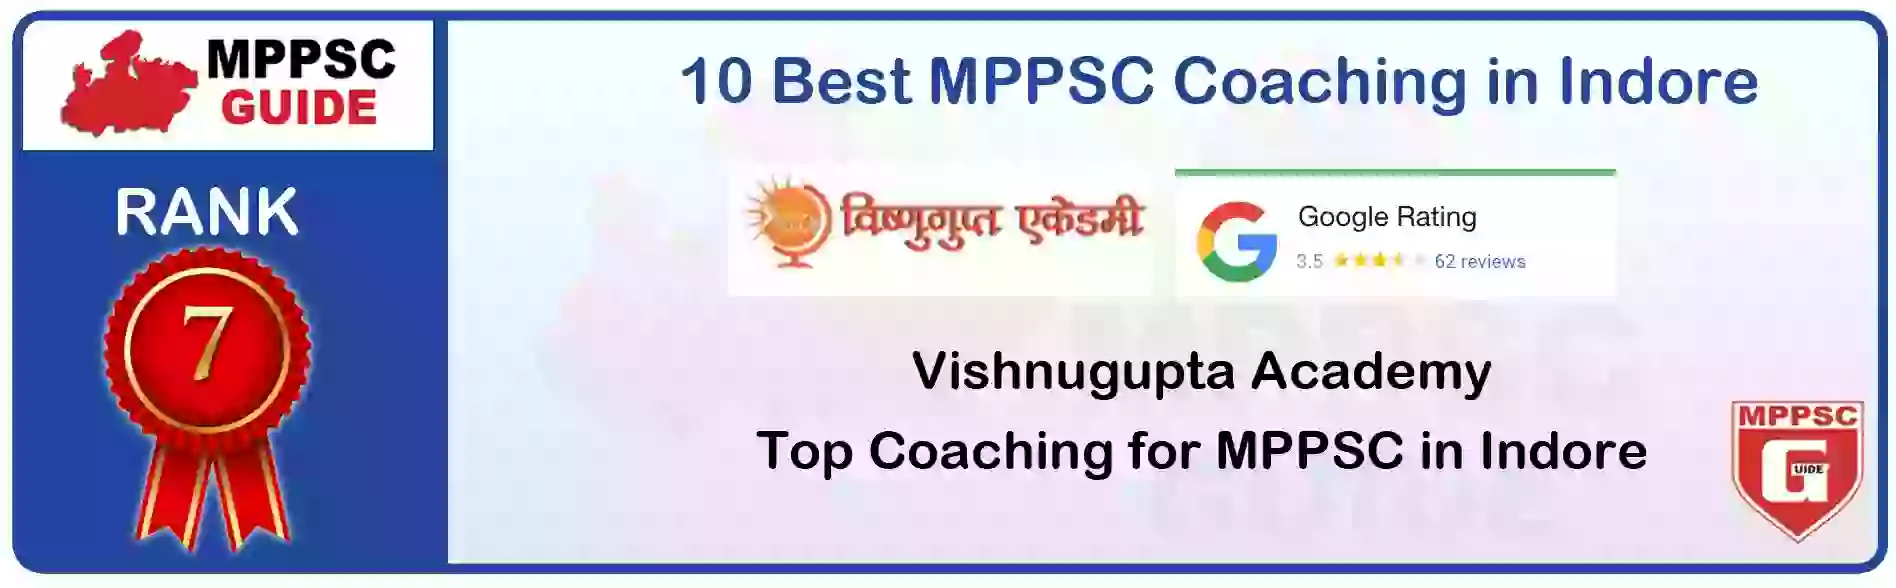 MPPSC Coaching in Indore, MPPSC Coaching Institute In Indore, Best MPPSC Coaching in Indore, Top 10 MPPSC Coaching In Indore, best mppsc coaching institute in indore, MPPSC Coaching Classes In Indore, MPPSC Online Coaching In Indore, mppsc coaching in indore bhanwarkua